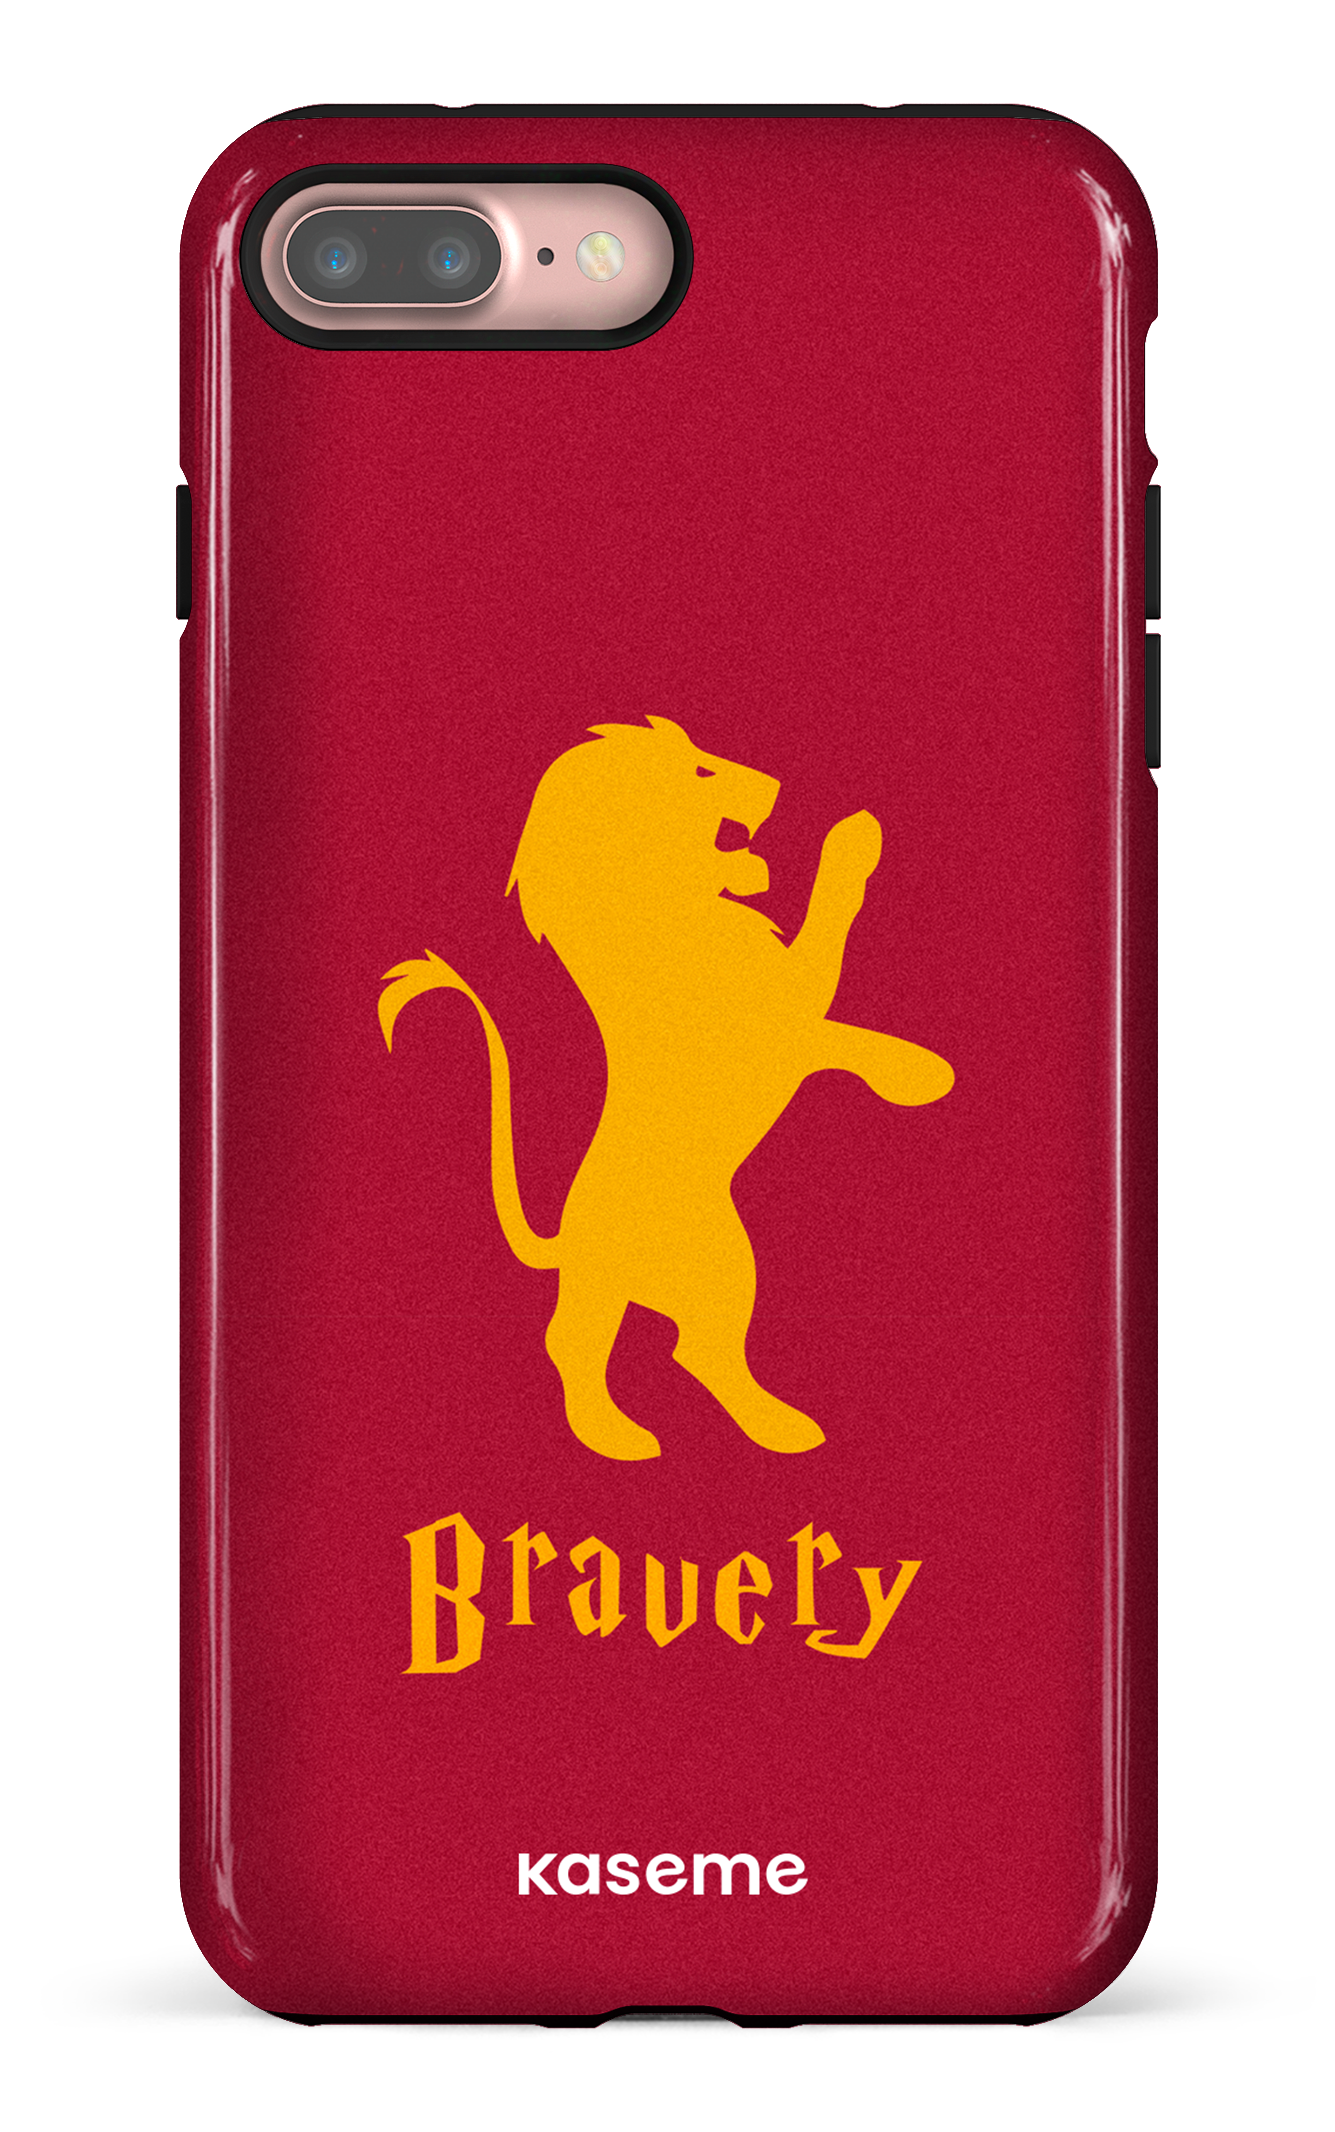 Bravery - iPhone 7 Plus